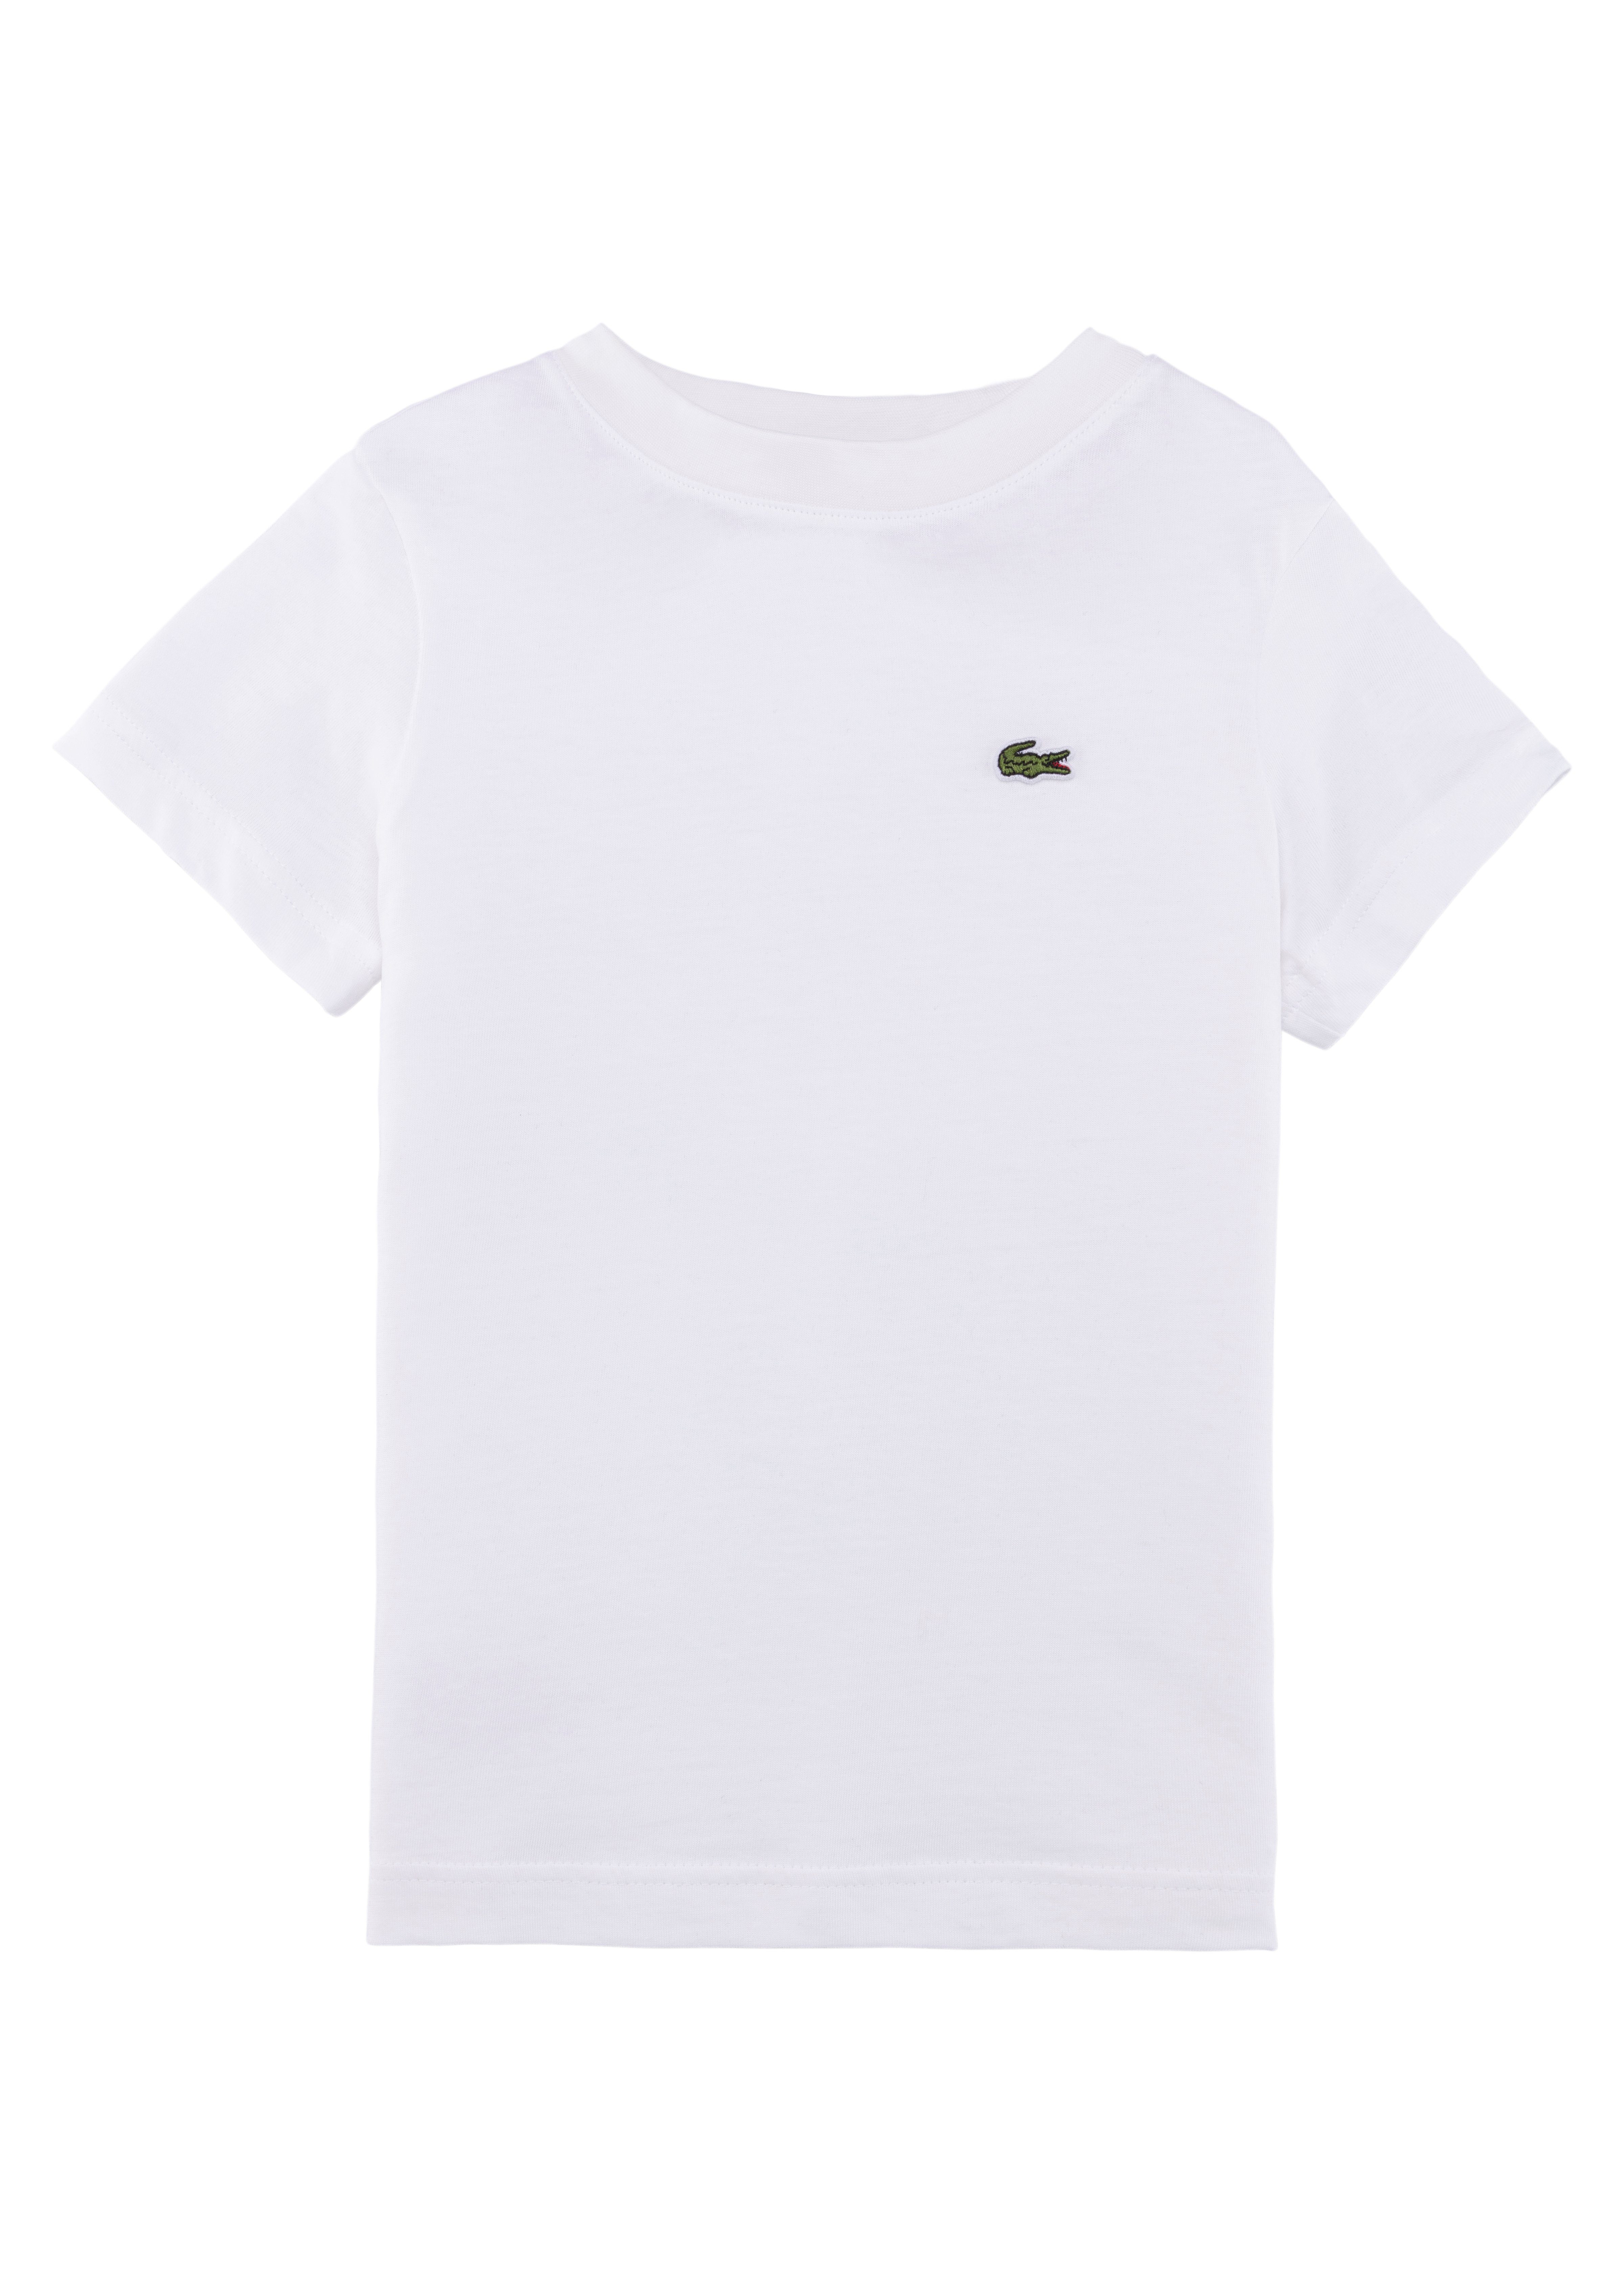 Lacoste T-Shirt mit Lacoste-Krokodil WHITE Brusthöhe auf